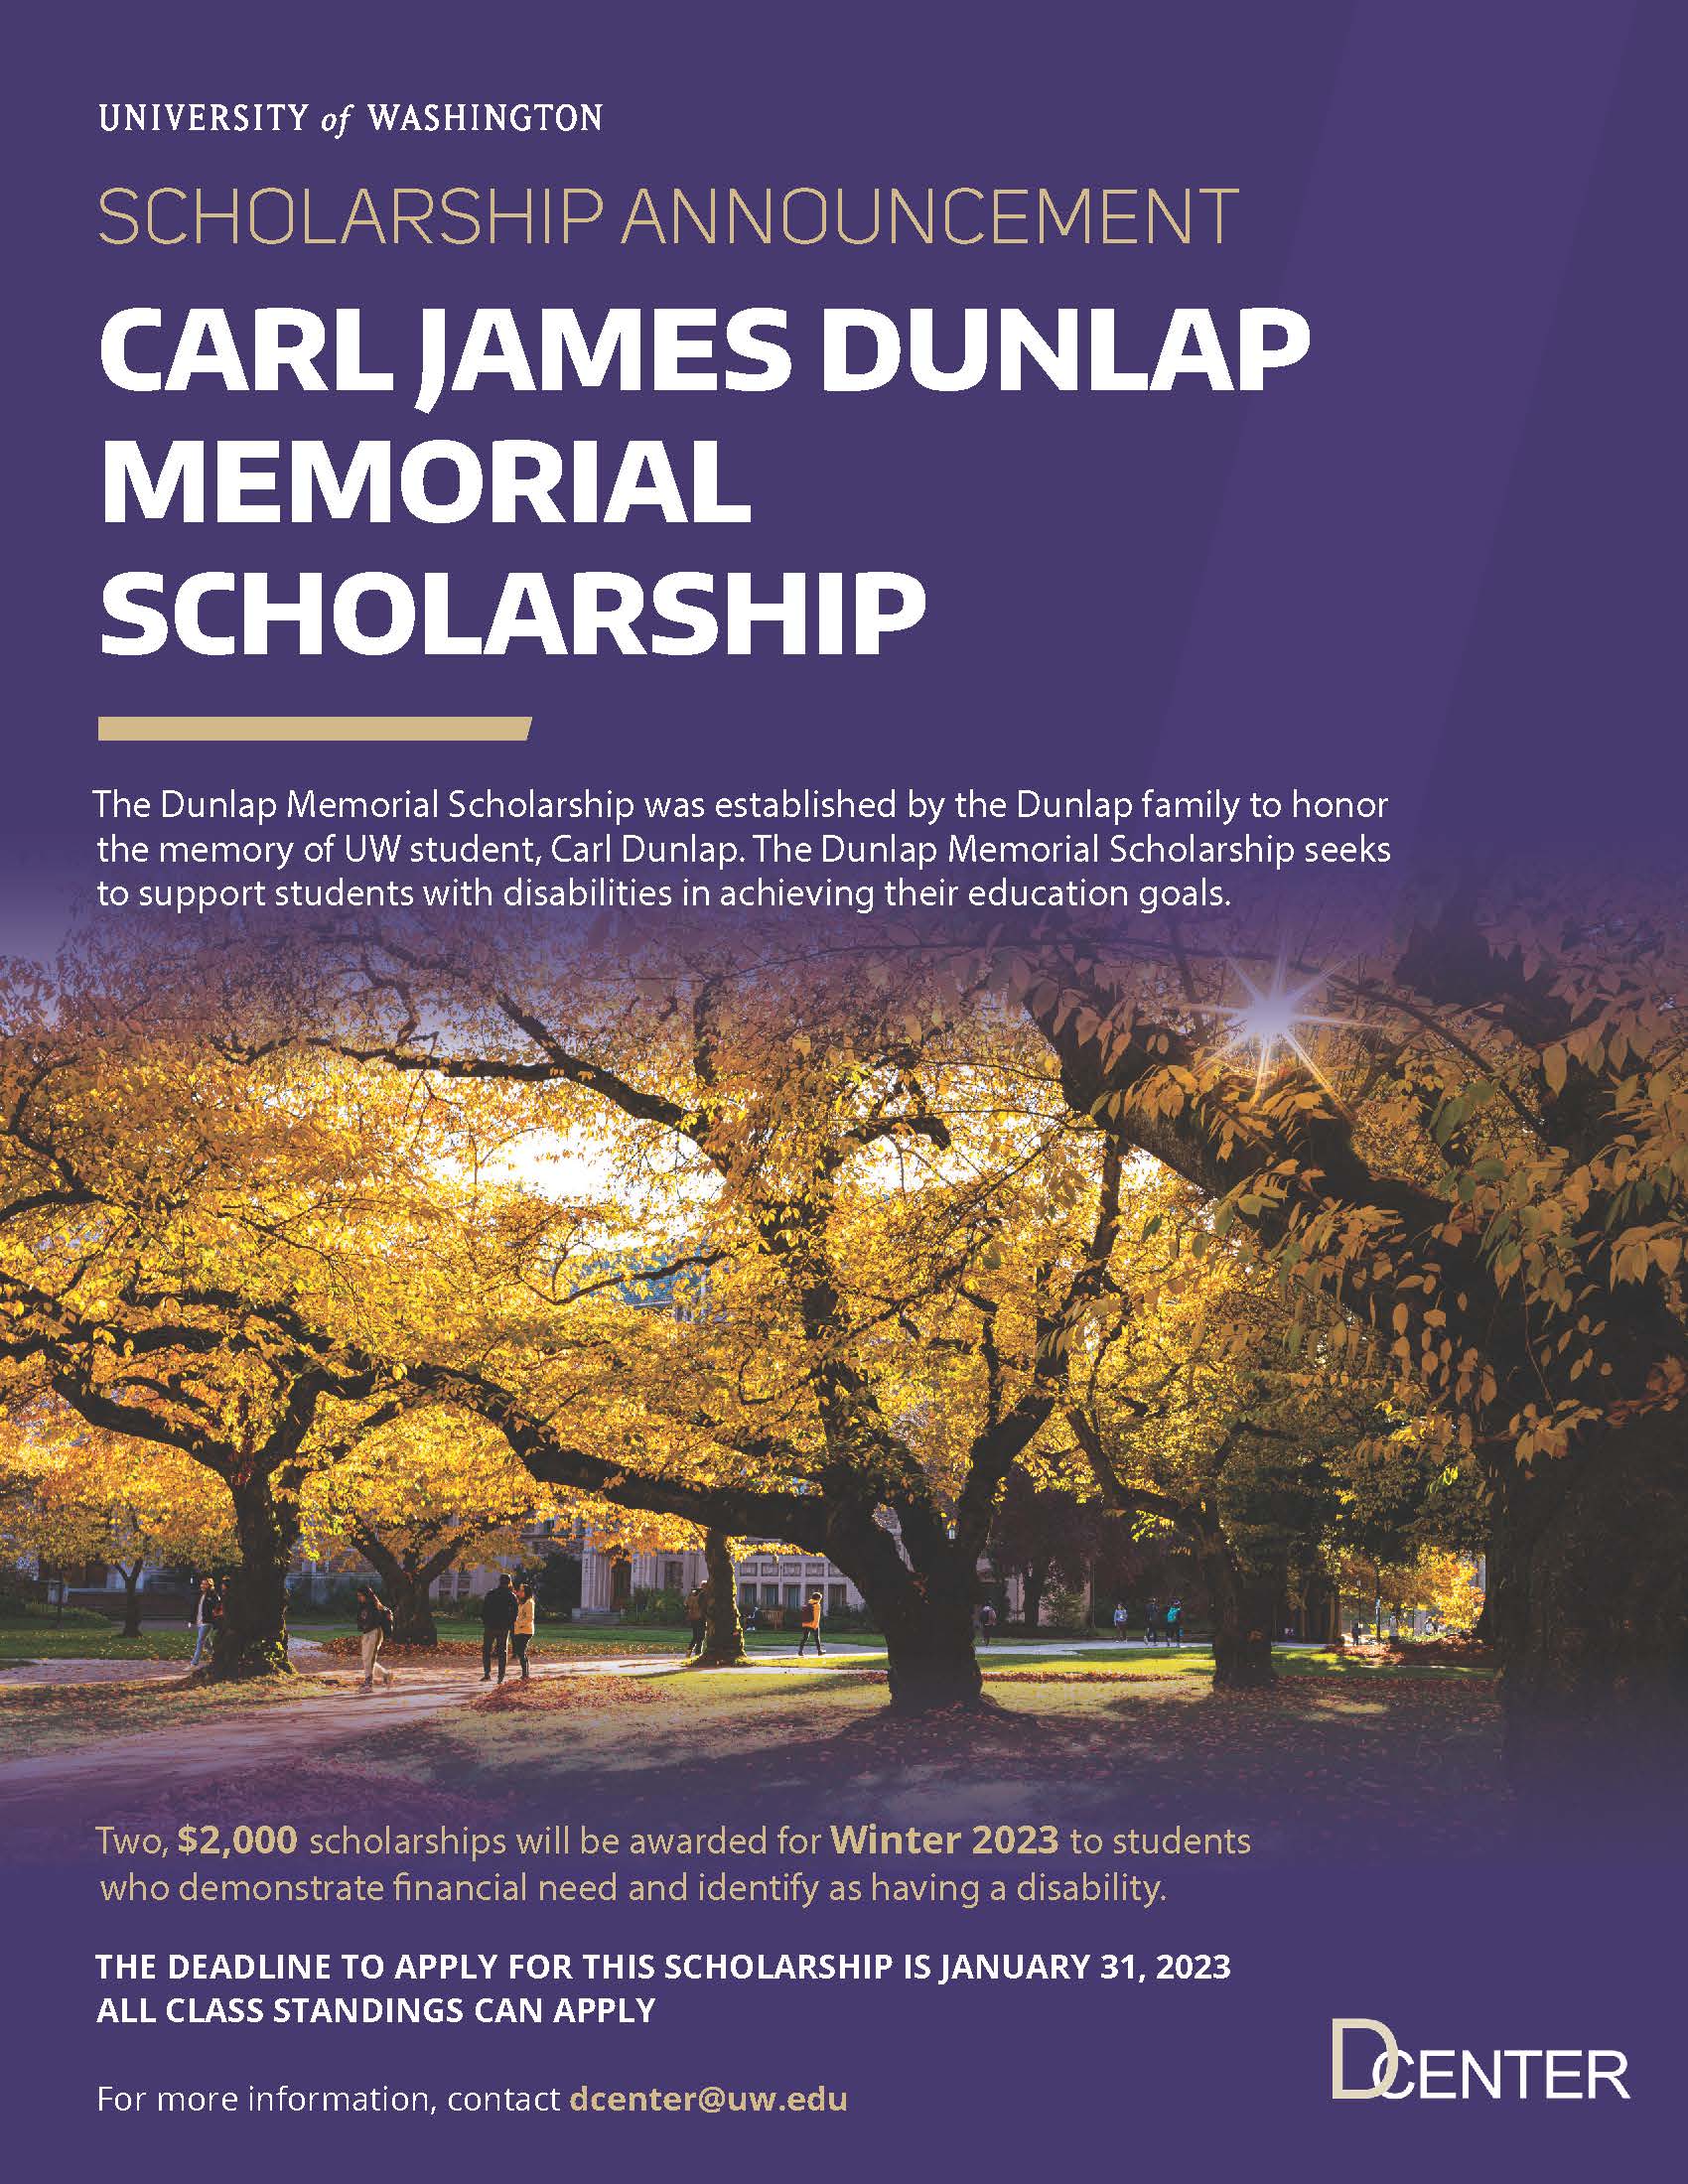 Dunlap Memorial Scholarship